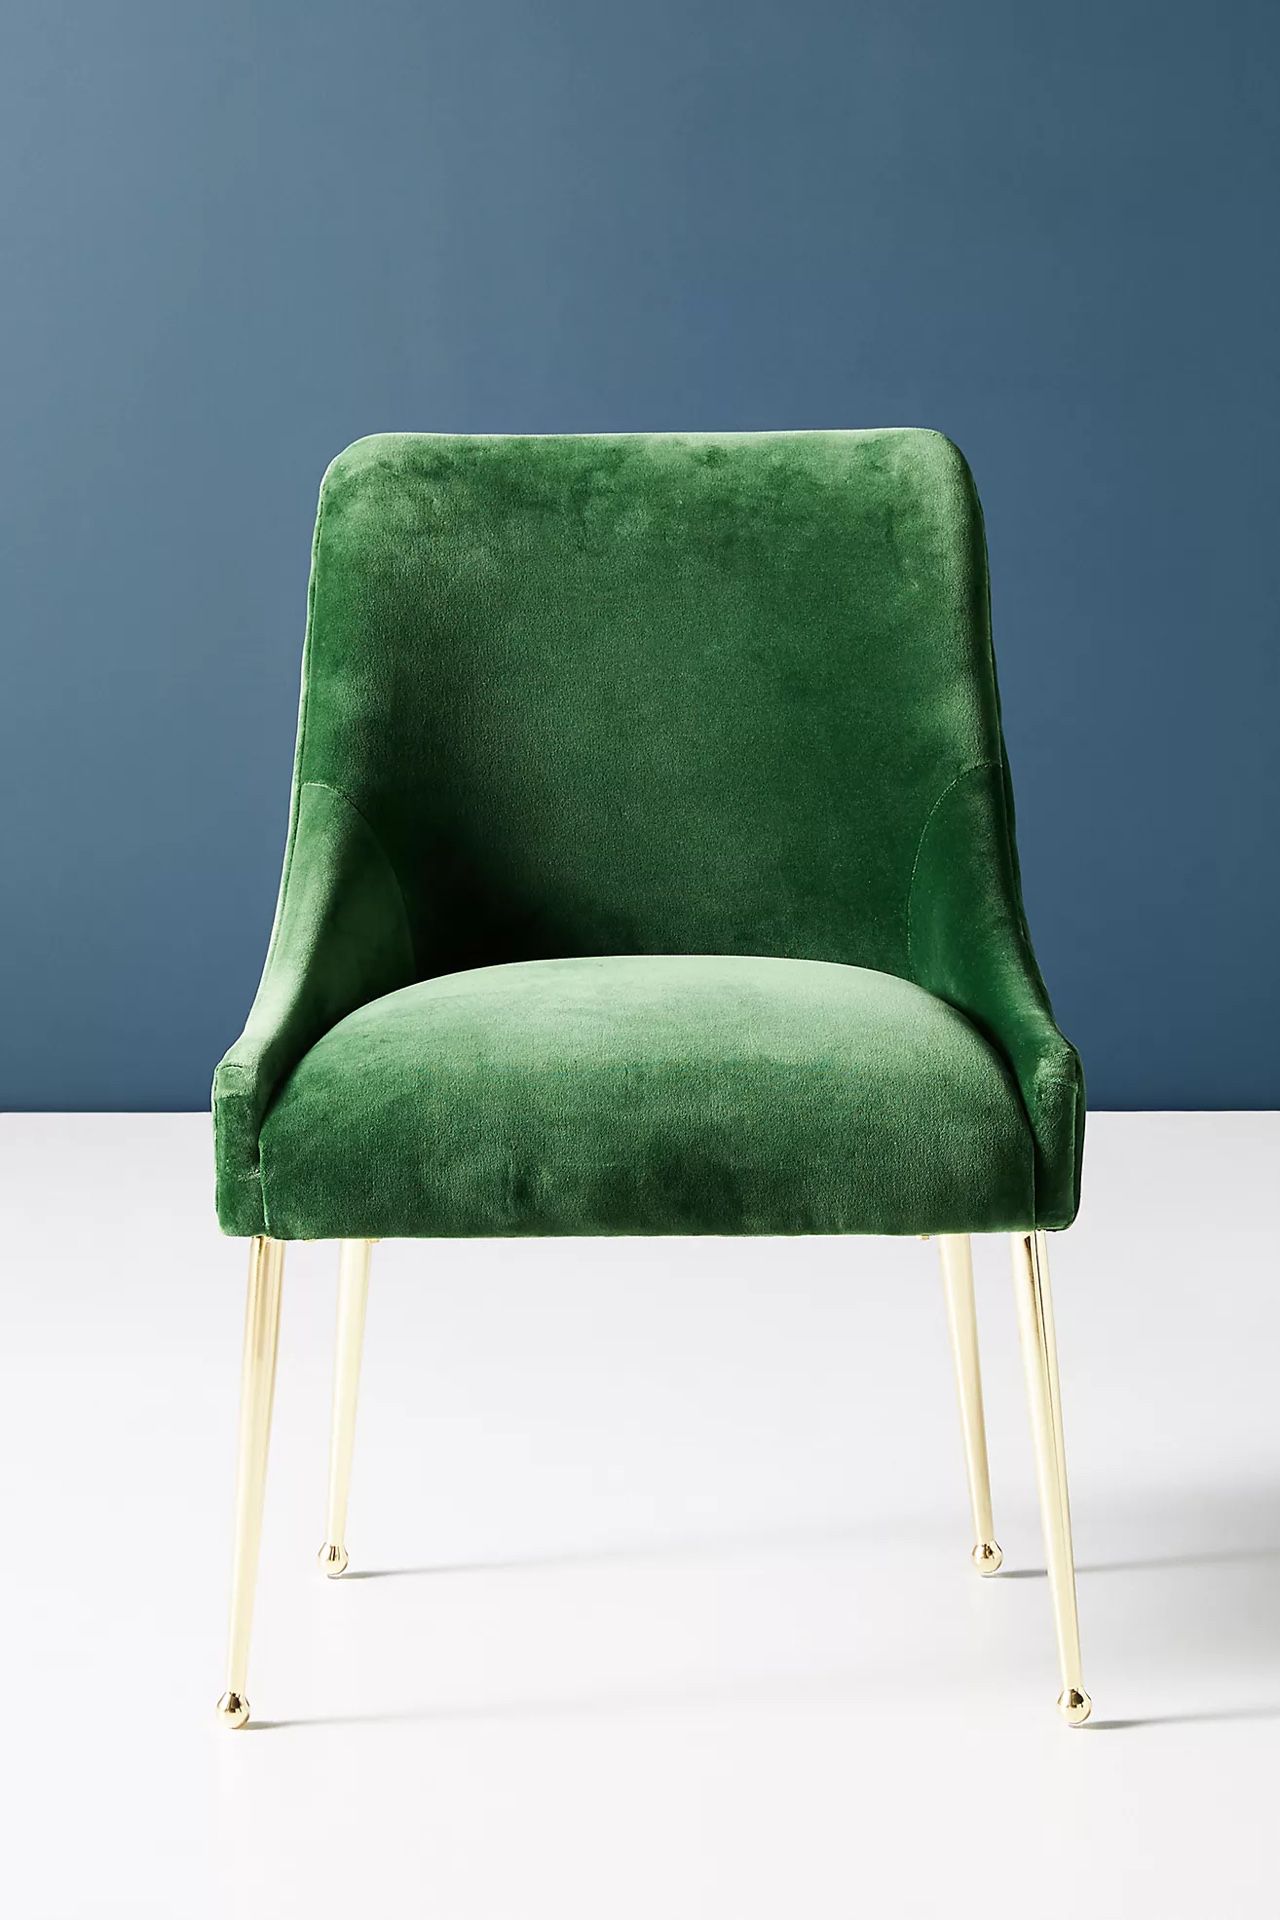 Super stylish green velvet dining chairs